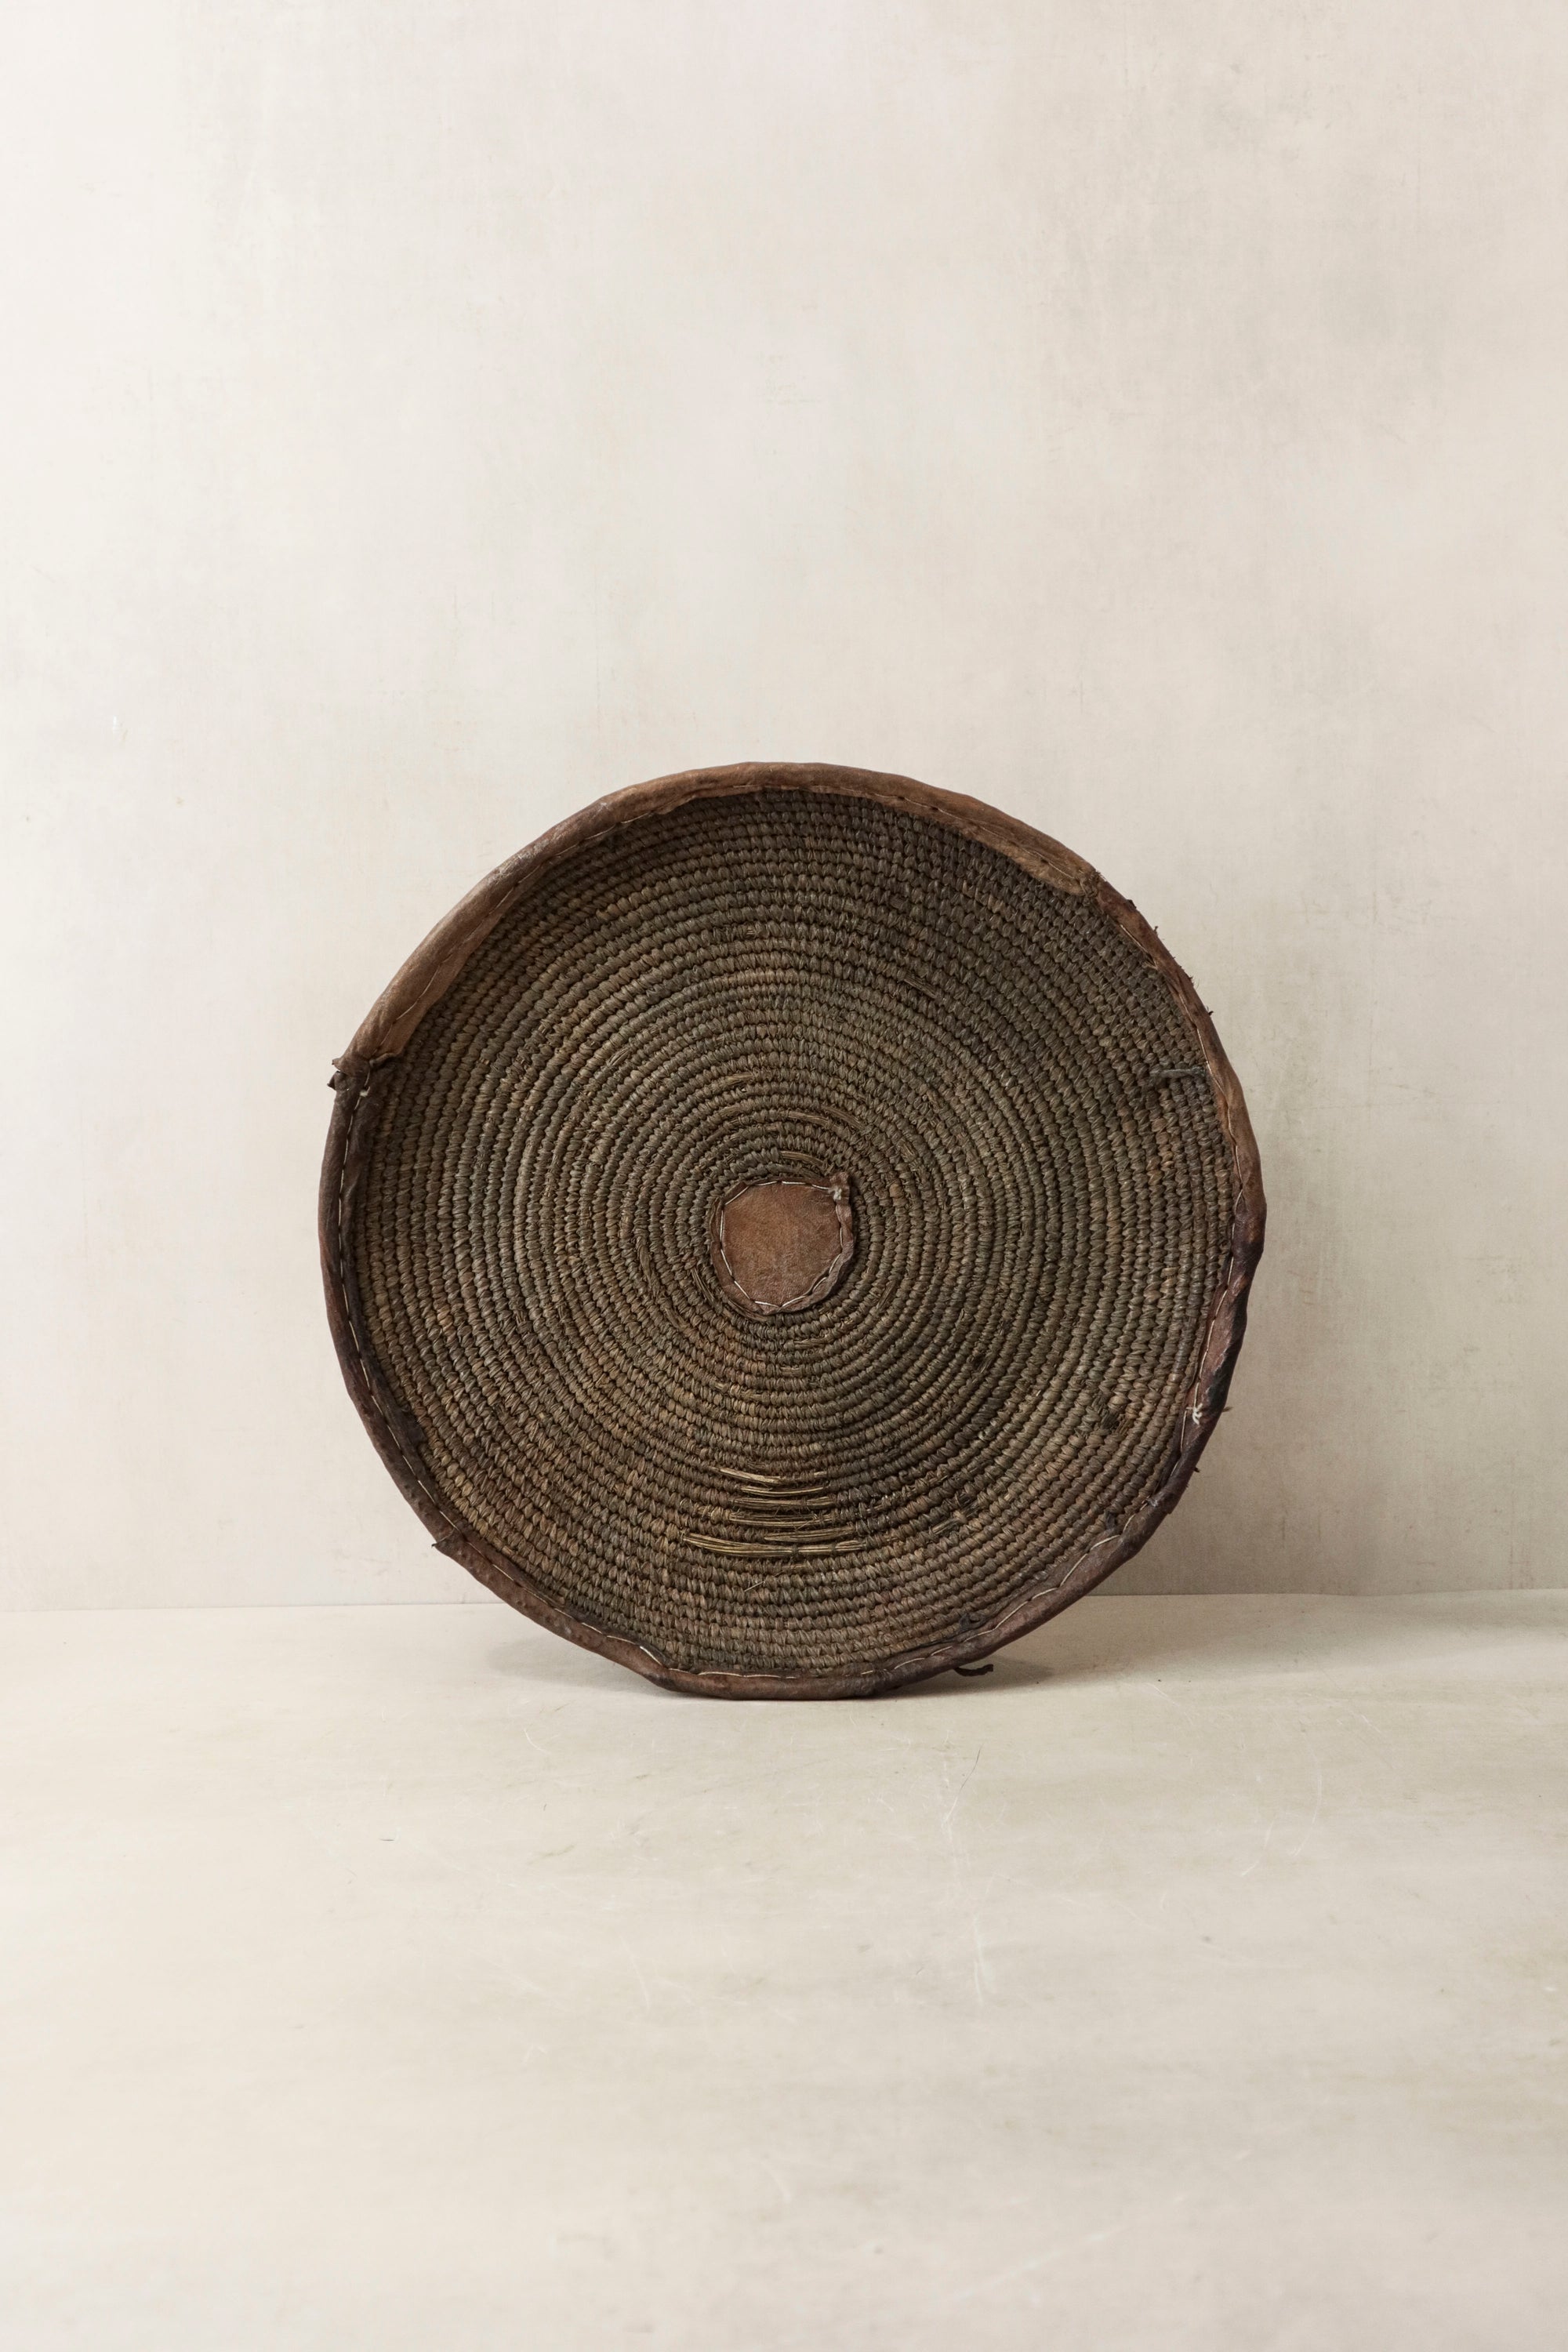 Handwoven Wall Basket - Chad - 41.9